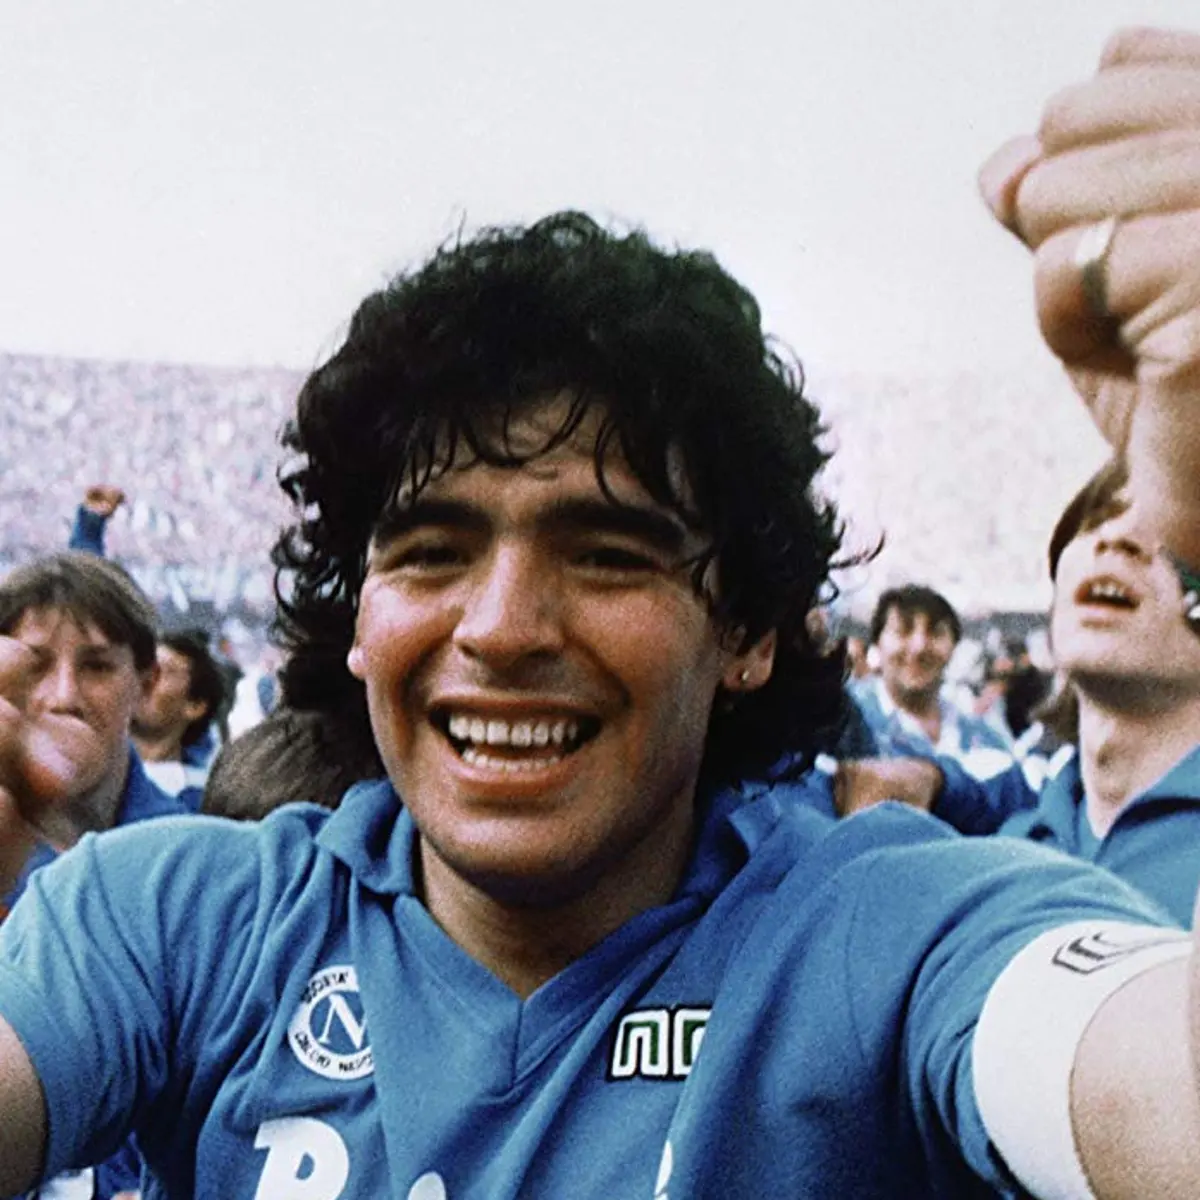 Maradona Hand of God jersey to be auctioned